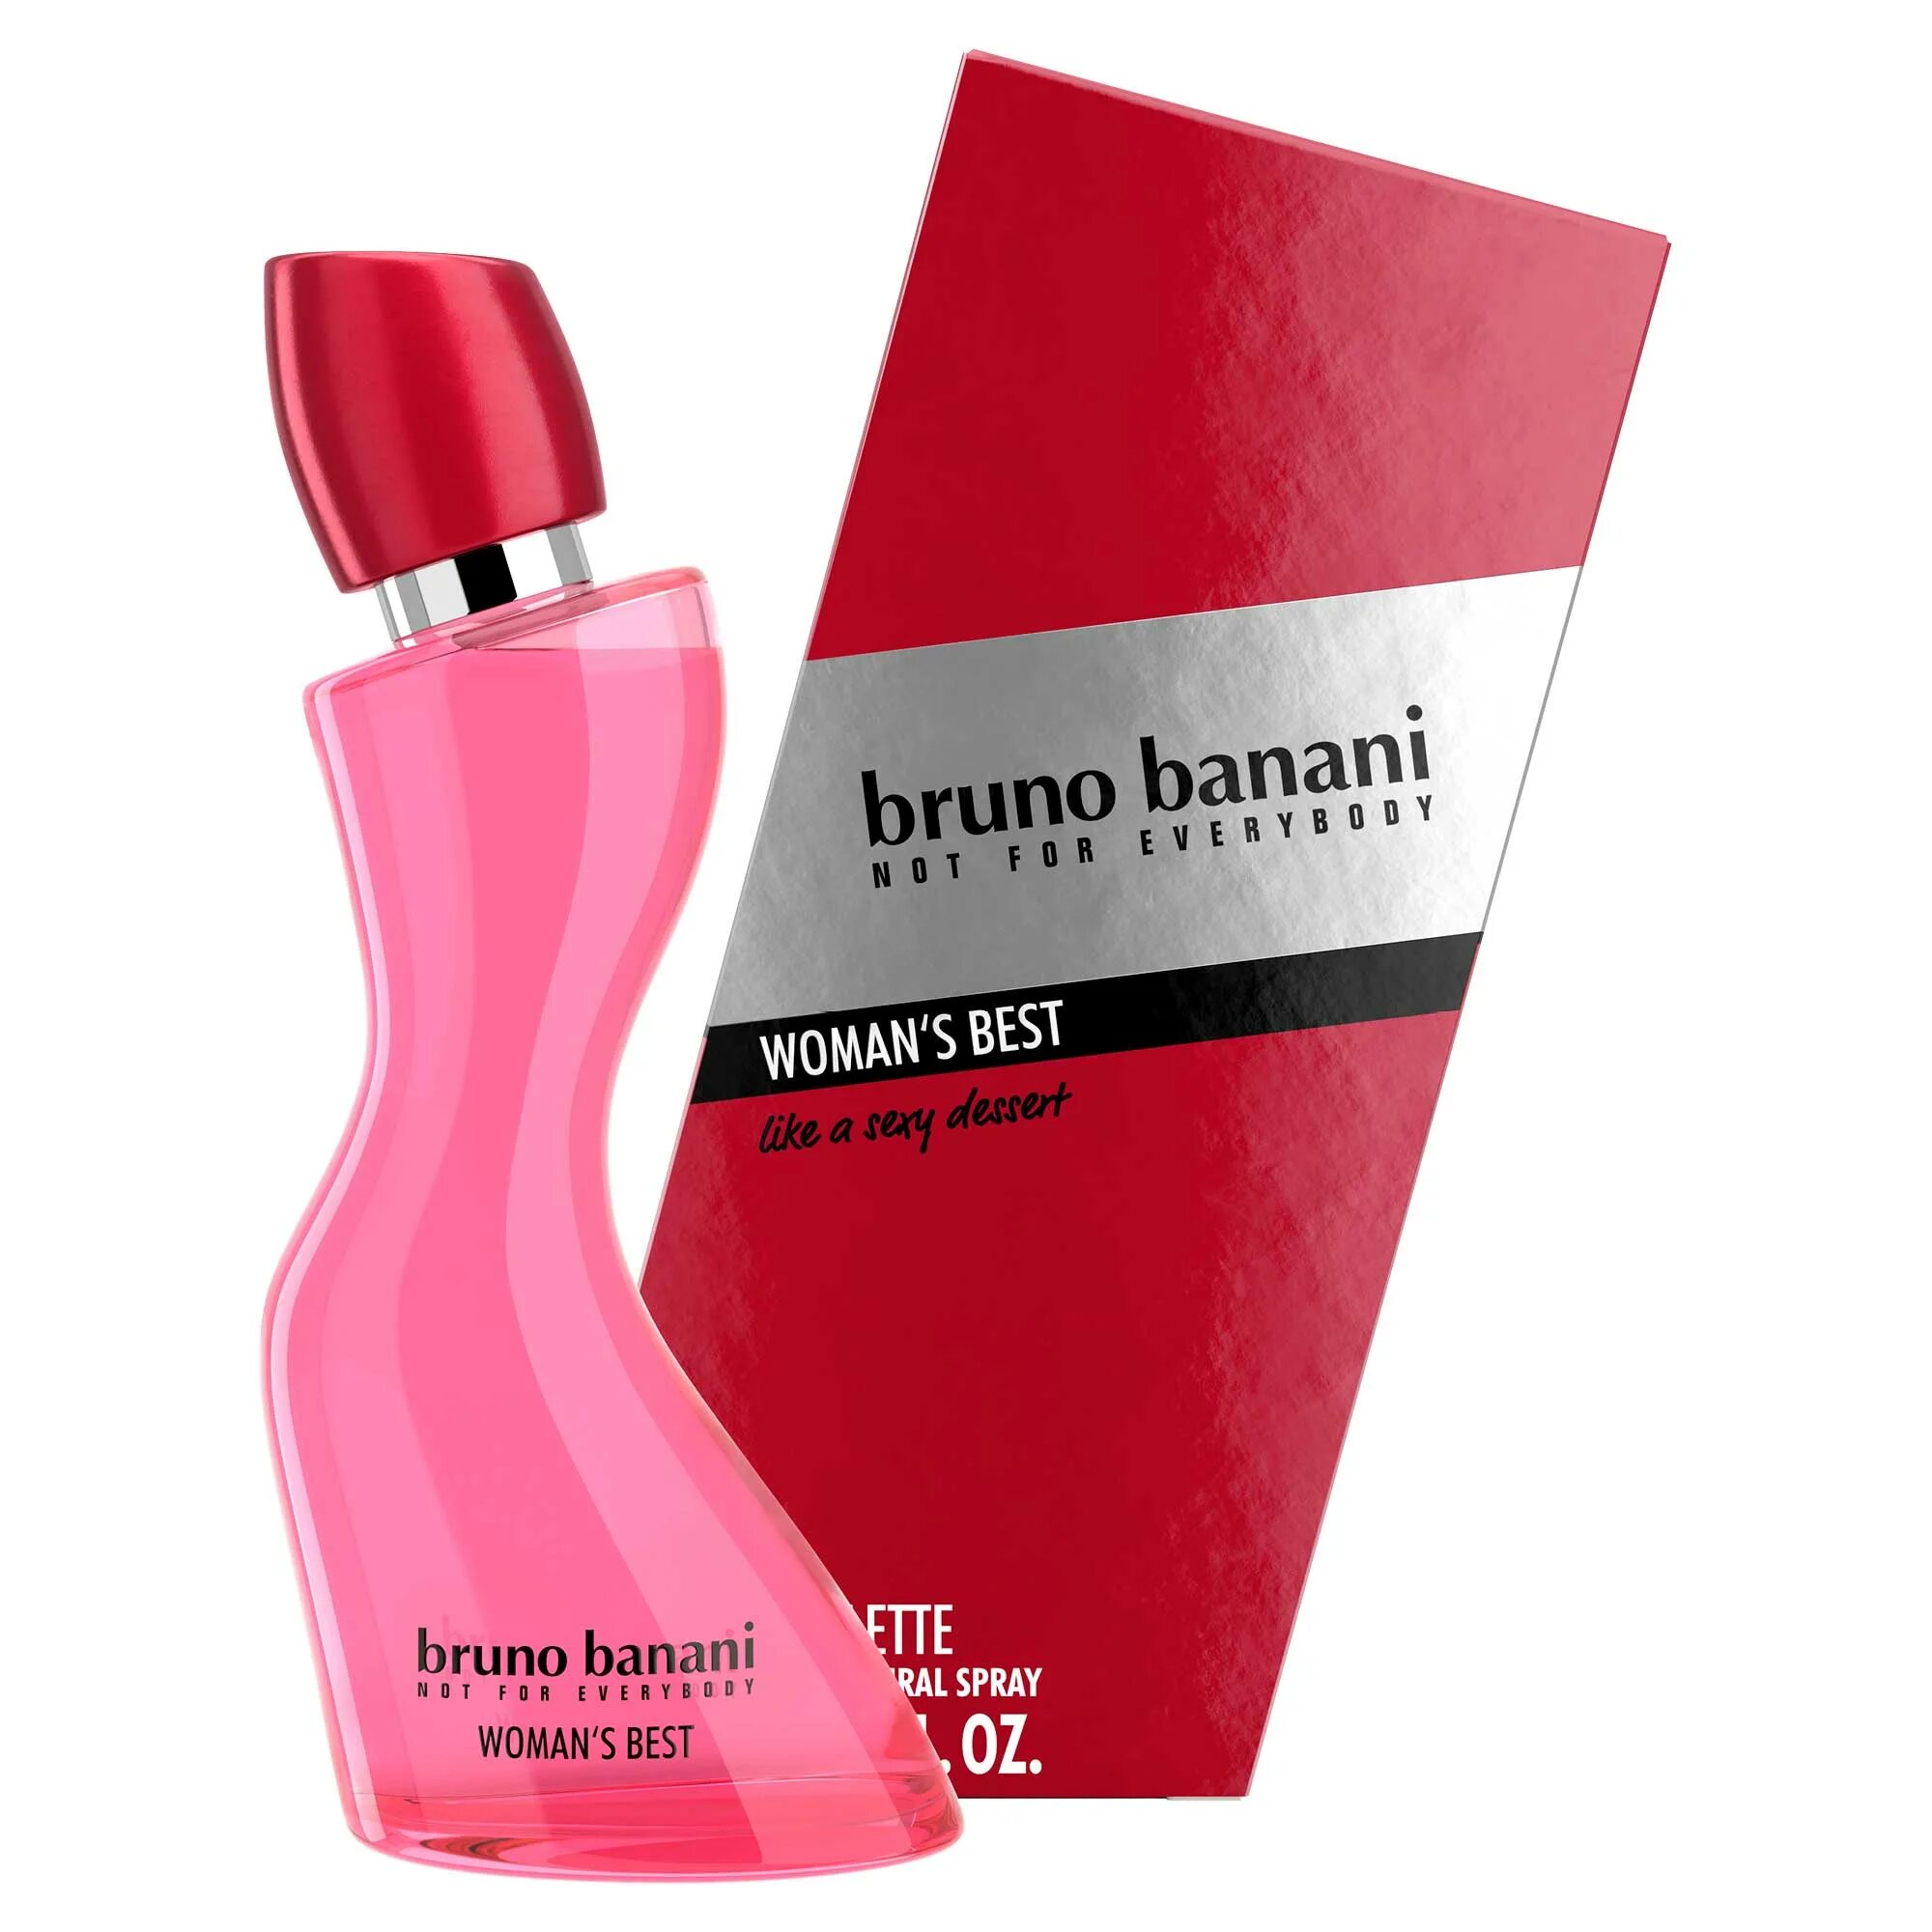 Bruno banani купить. Bruno Banani women`s best 20 ml EDT. Bruno Banani woman's best туалетная вода женская 30 мл.